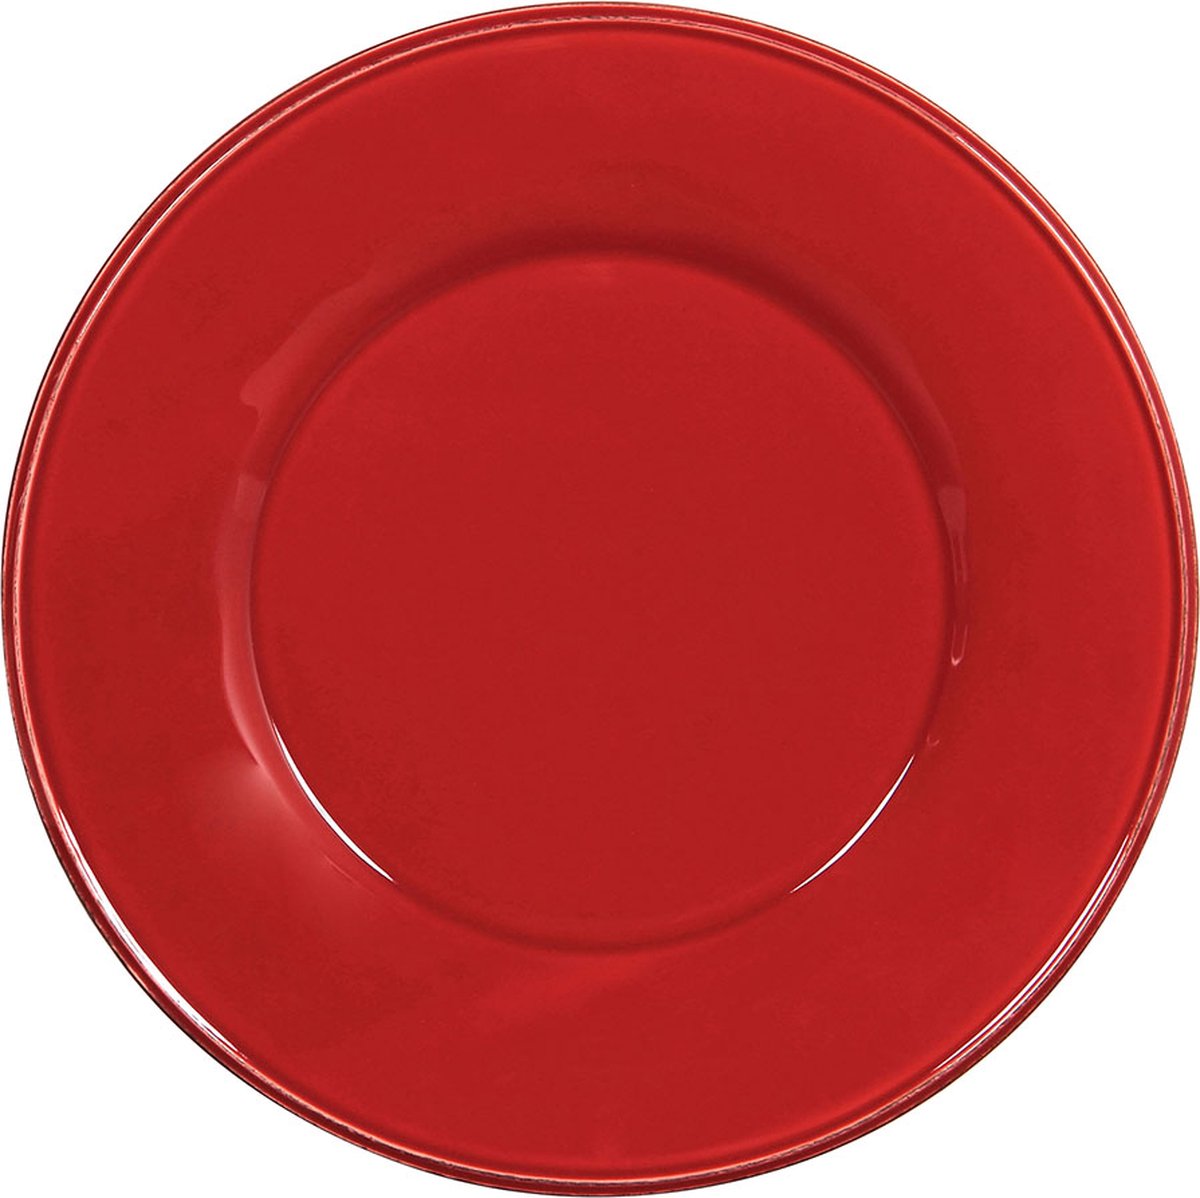 Rood Dinerbord Constance - Set van VIER borden - Cote Table